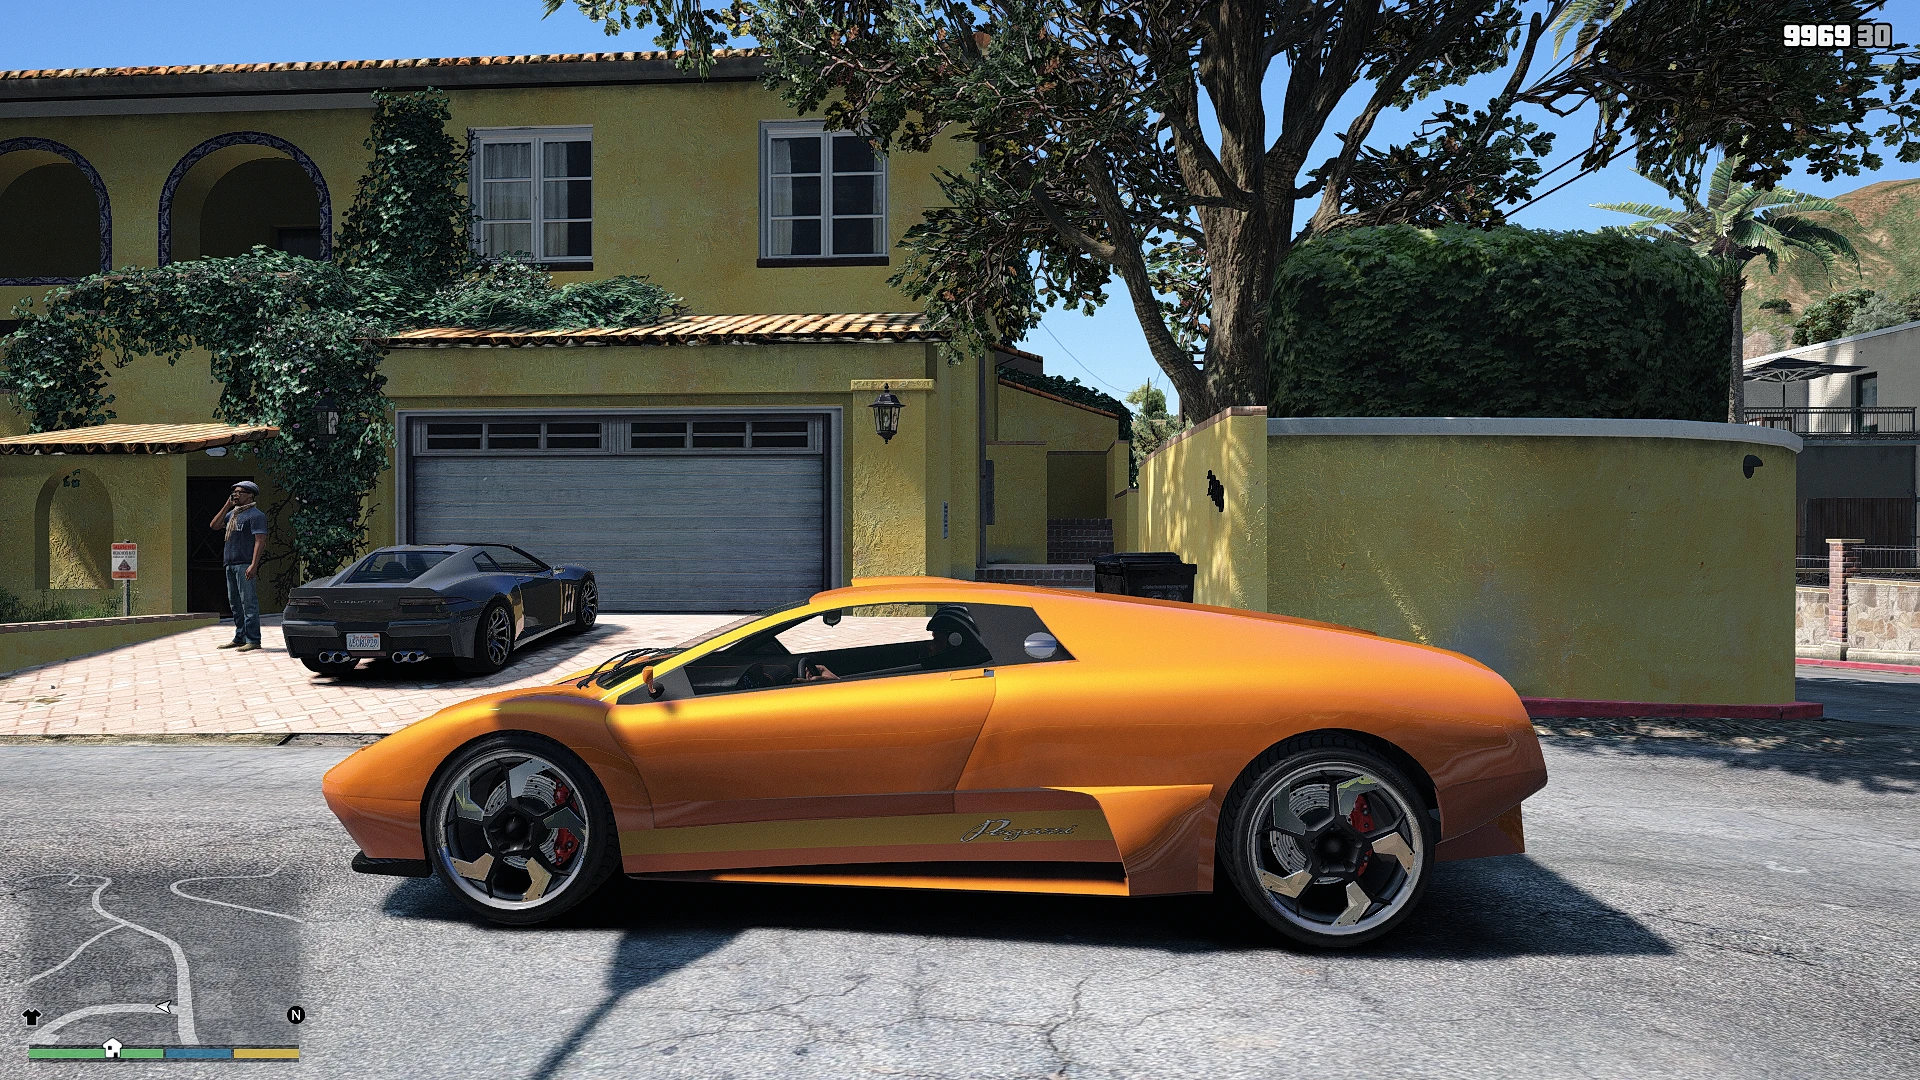 Jbx graphics 3. The Setup GTA 5. Lamborghini Diablo Forza Horizon 5. Lamborghini Diablo GTR Forza Horizon 5. GTA 5 Reshade.